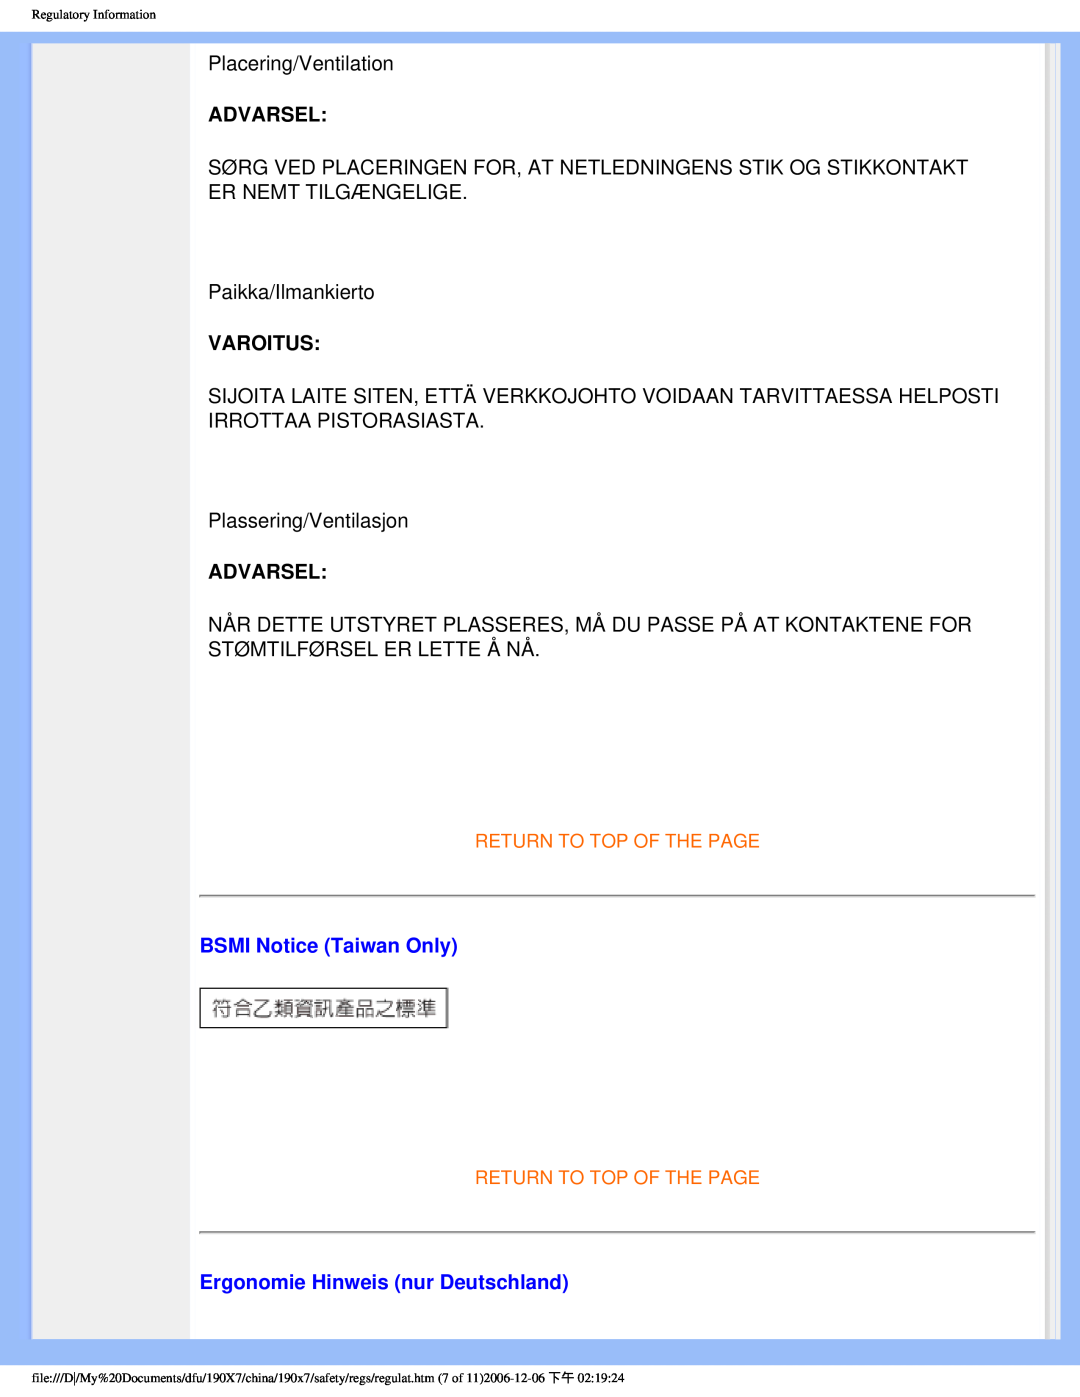 Philips 190X7 user manual Advarsel, Varoitus, BSMI Notice Taiwan Only, Ergonomie Hinweis nur Deutschland 